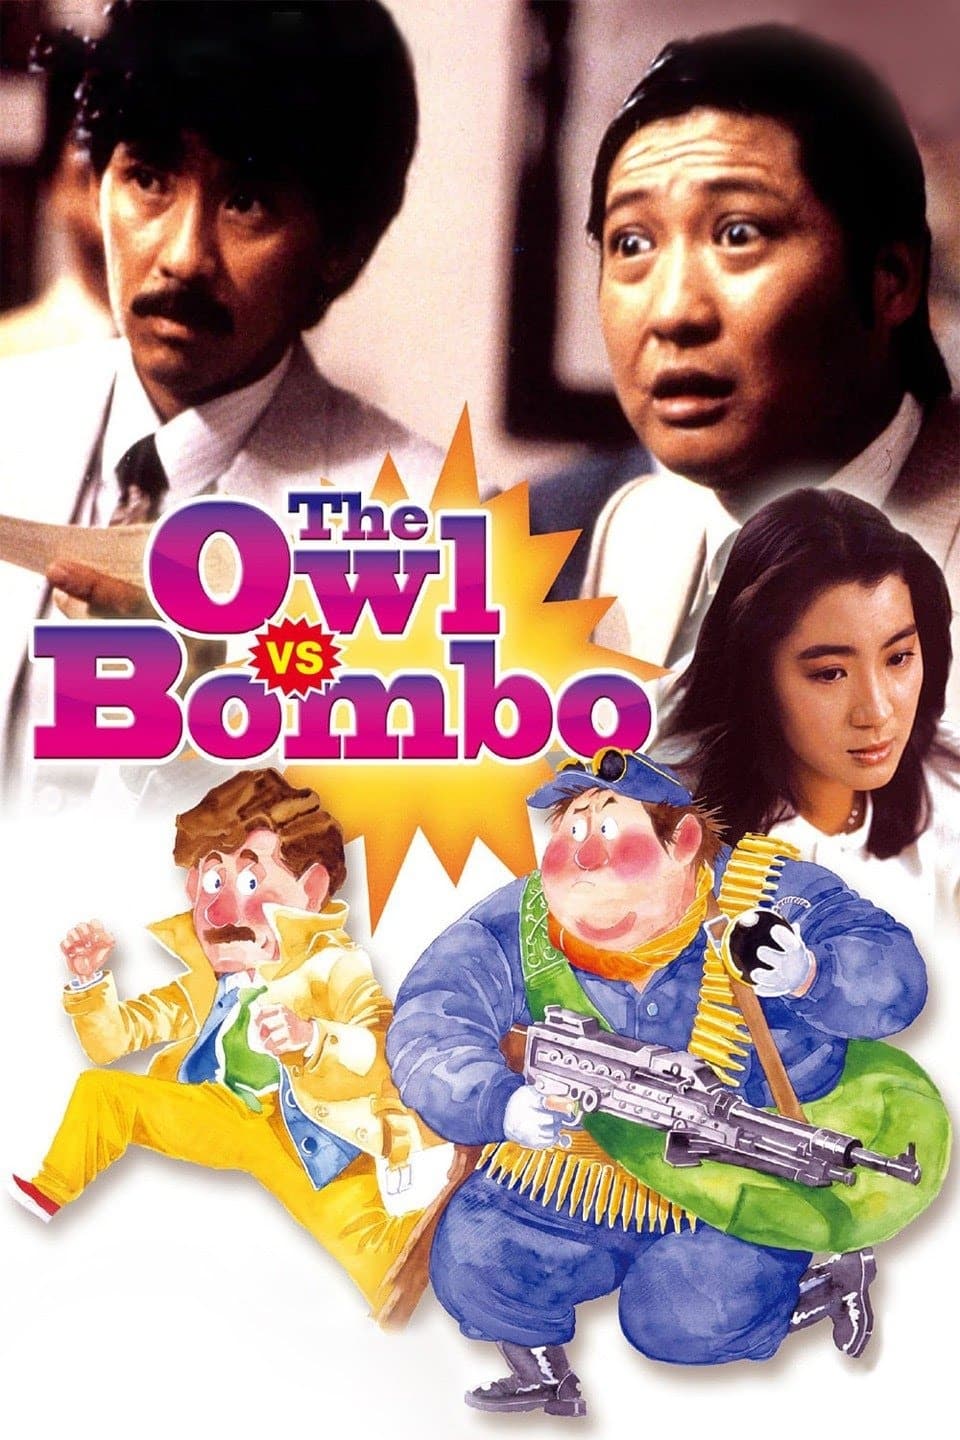 The Owl vs Bombo (1984)